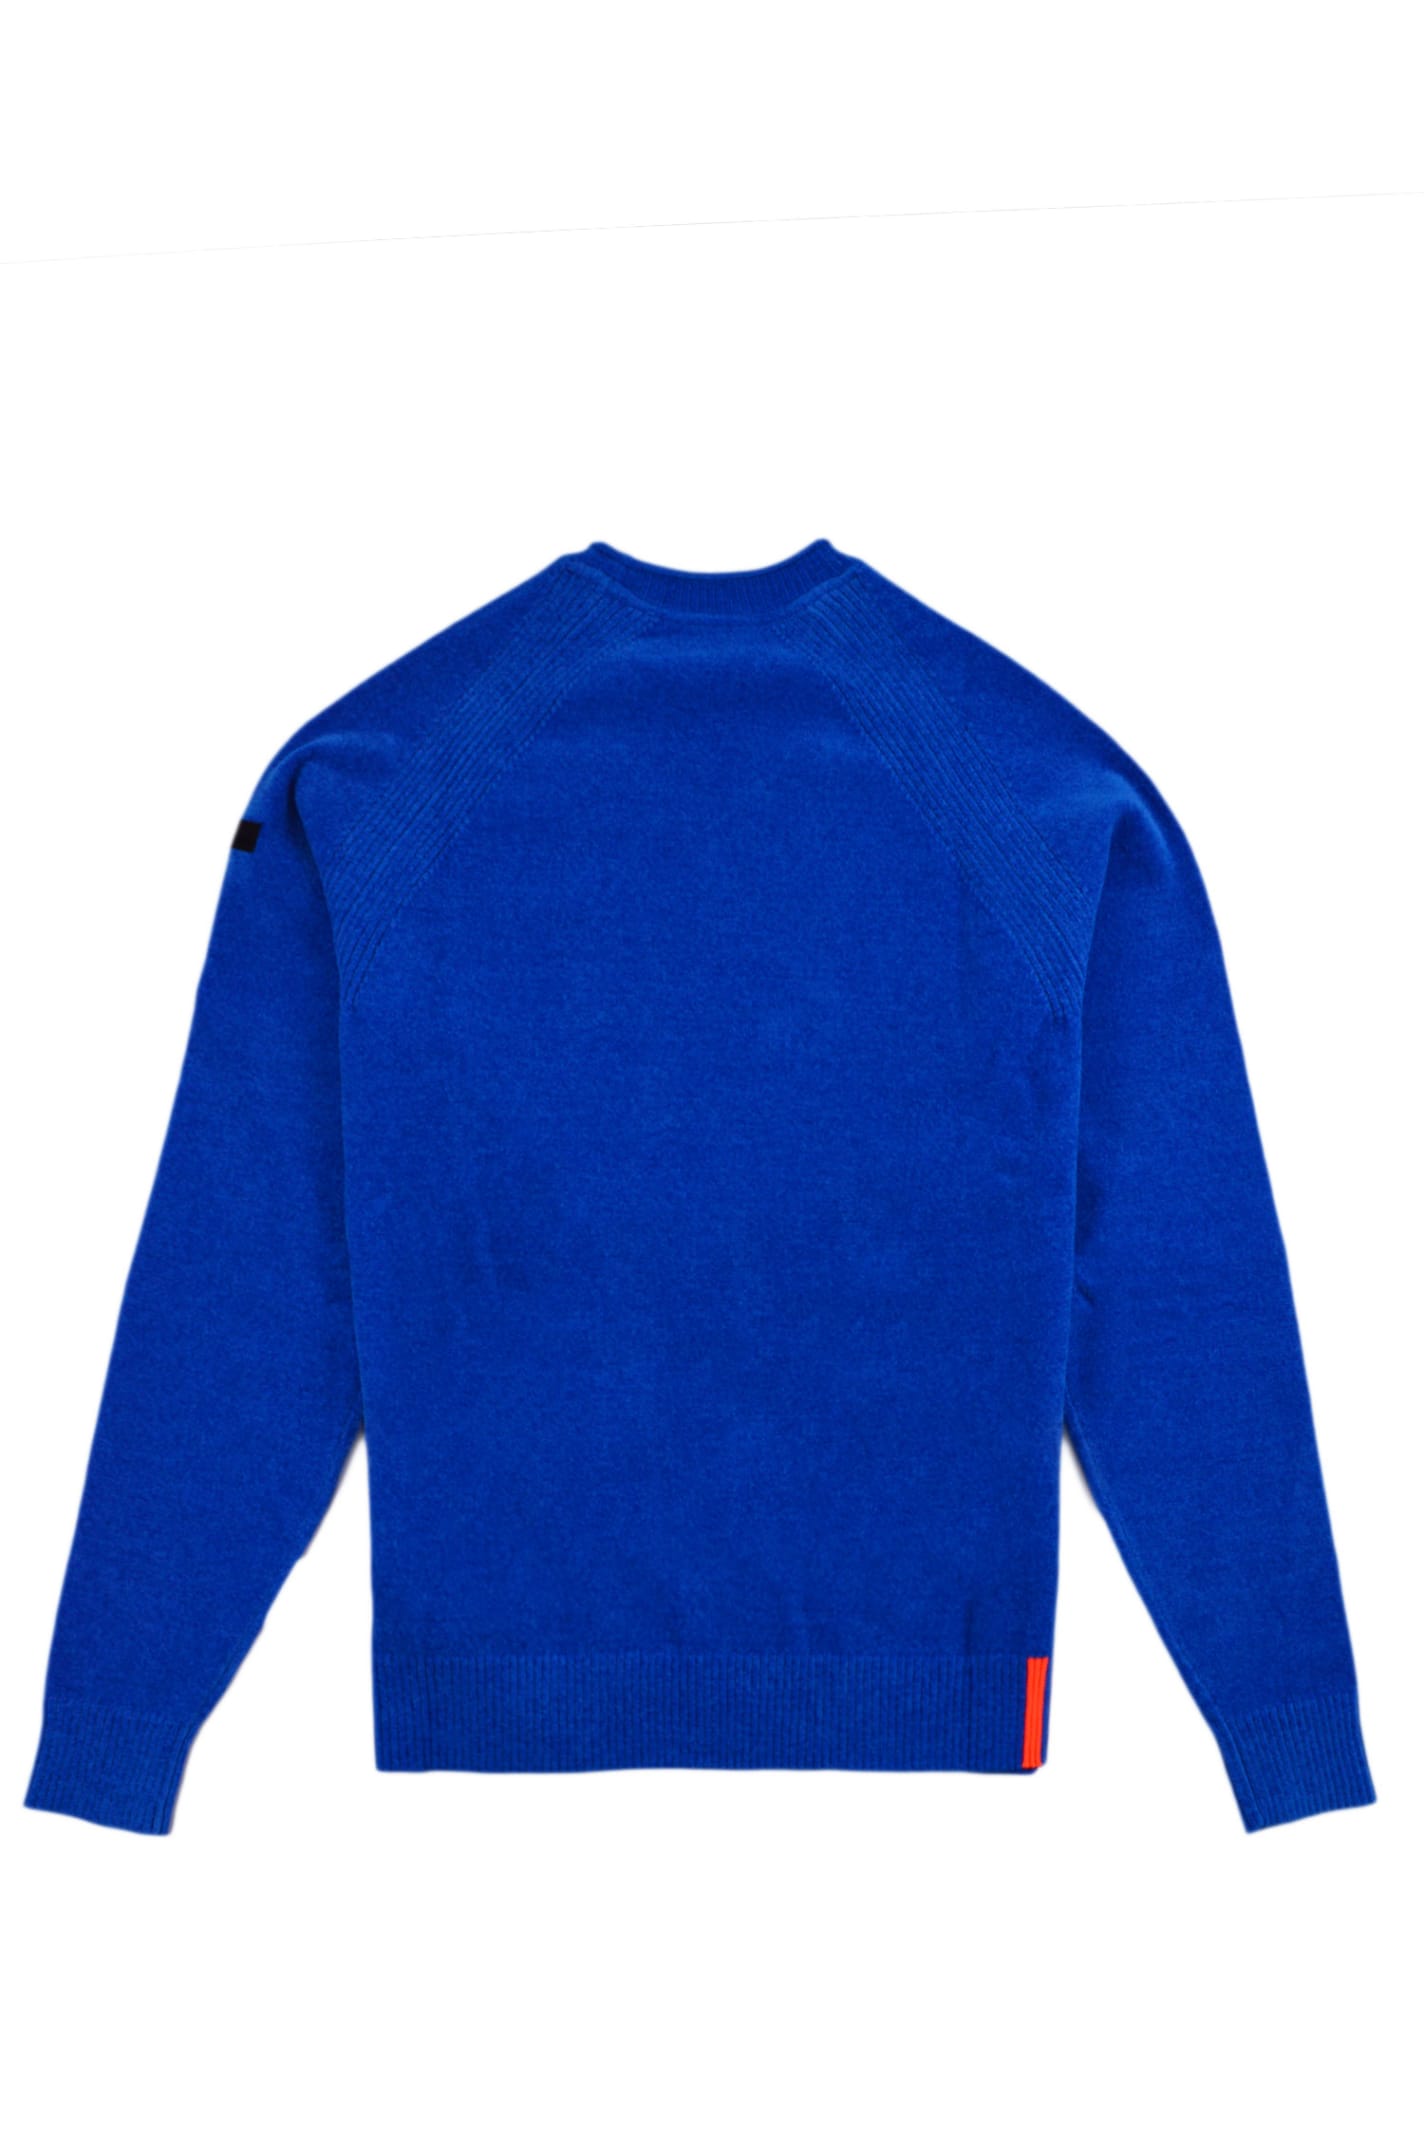 Shop Rrd - Roberto Ricci Design Sweater Sweater In Blu Royal